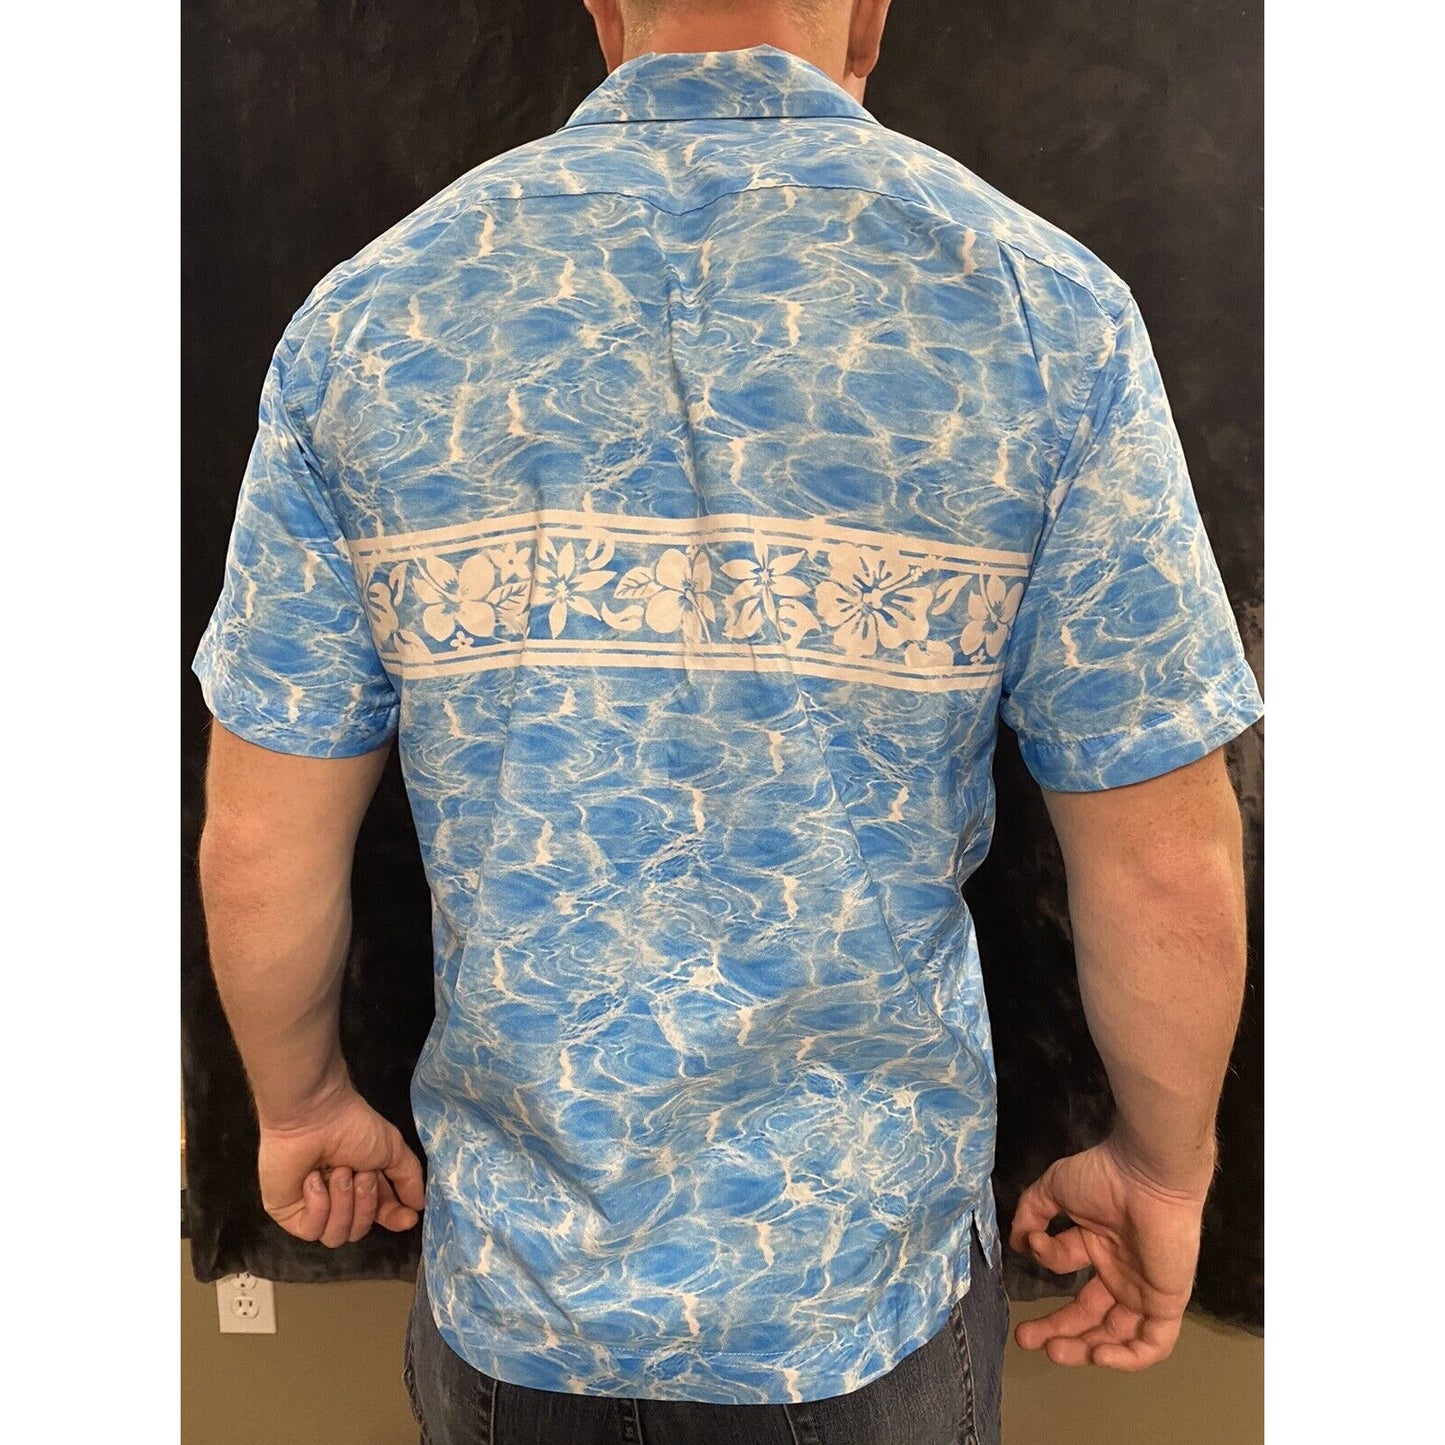 ARIZONA Jean Co. Hawaiian Shirt Aloha Large Sky Blue Floral Band Short Sleeves L